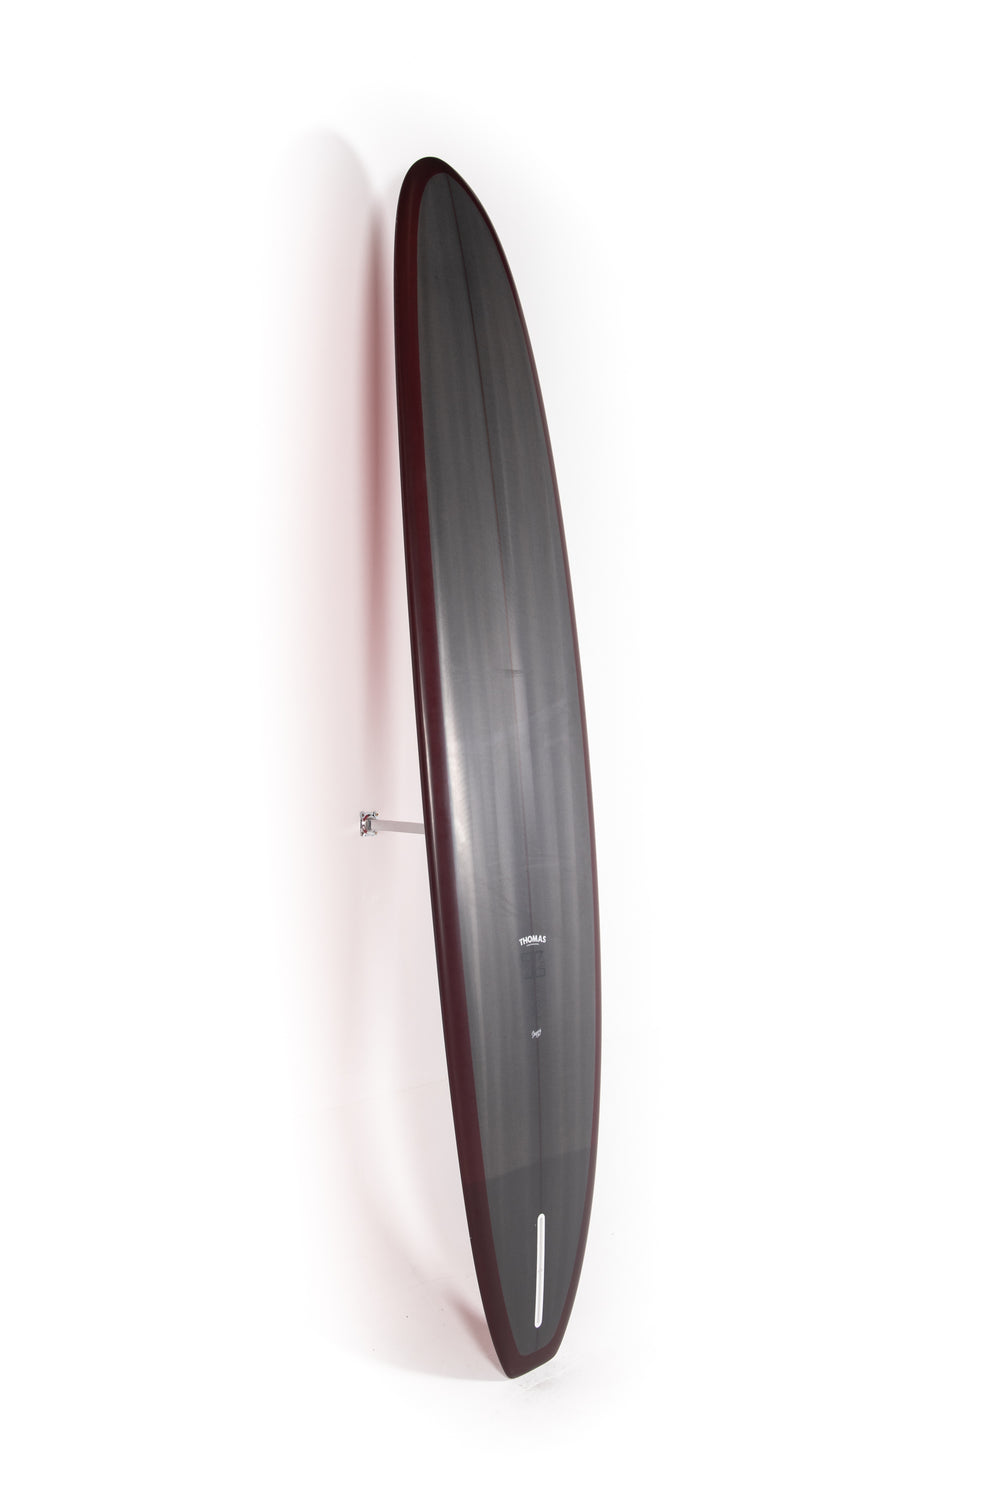 Thomas Surfboards - HARRISON - 9'6